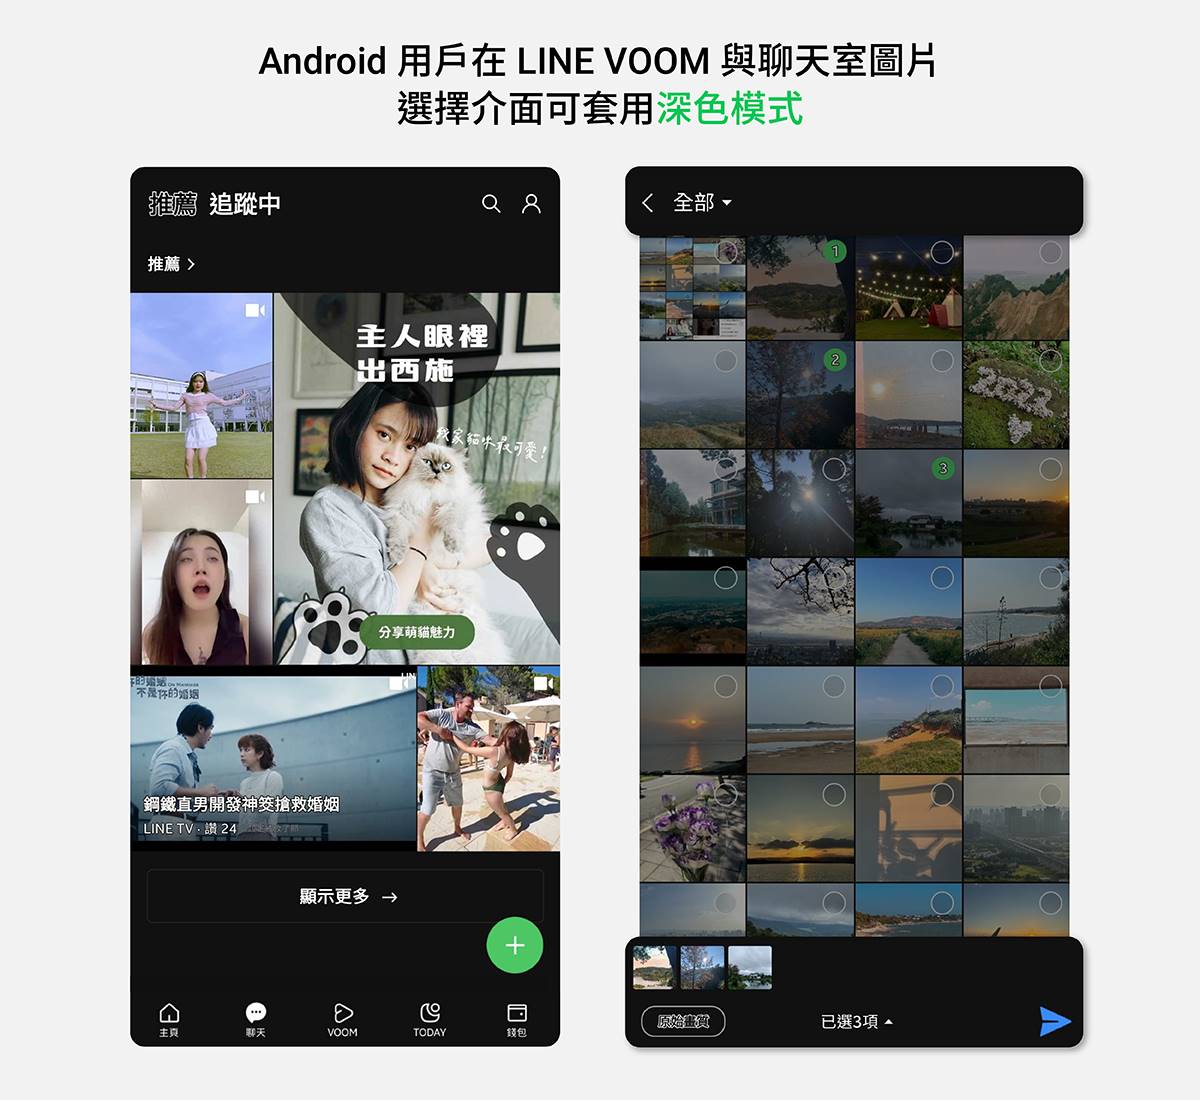 Android用戶LINE VOOM、圖片選擇介面可套用深色模式